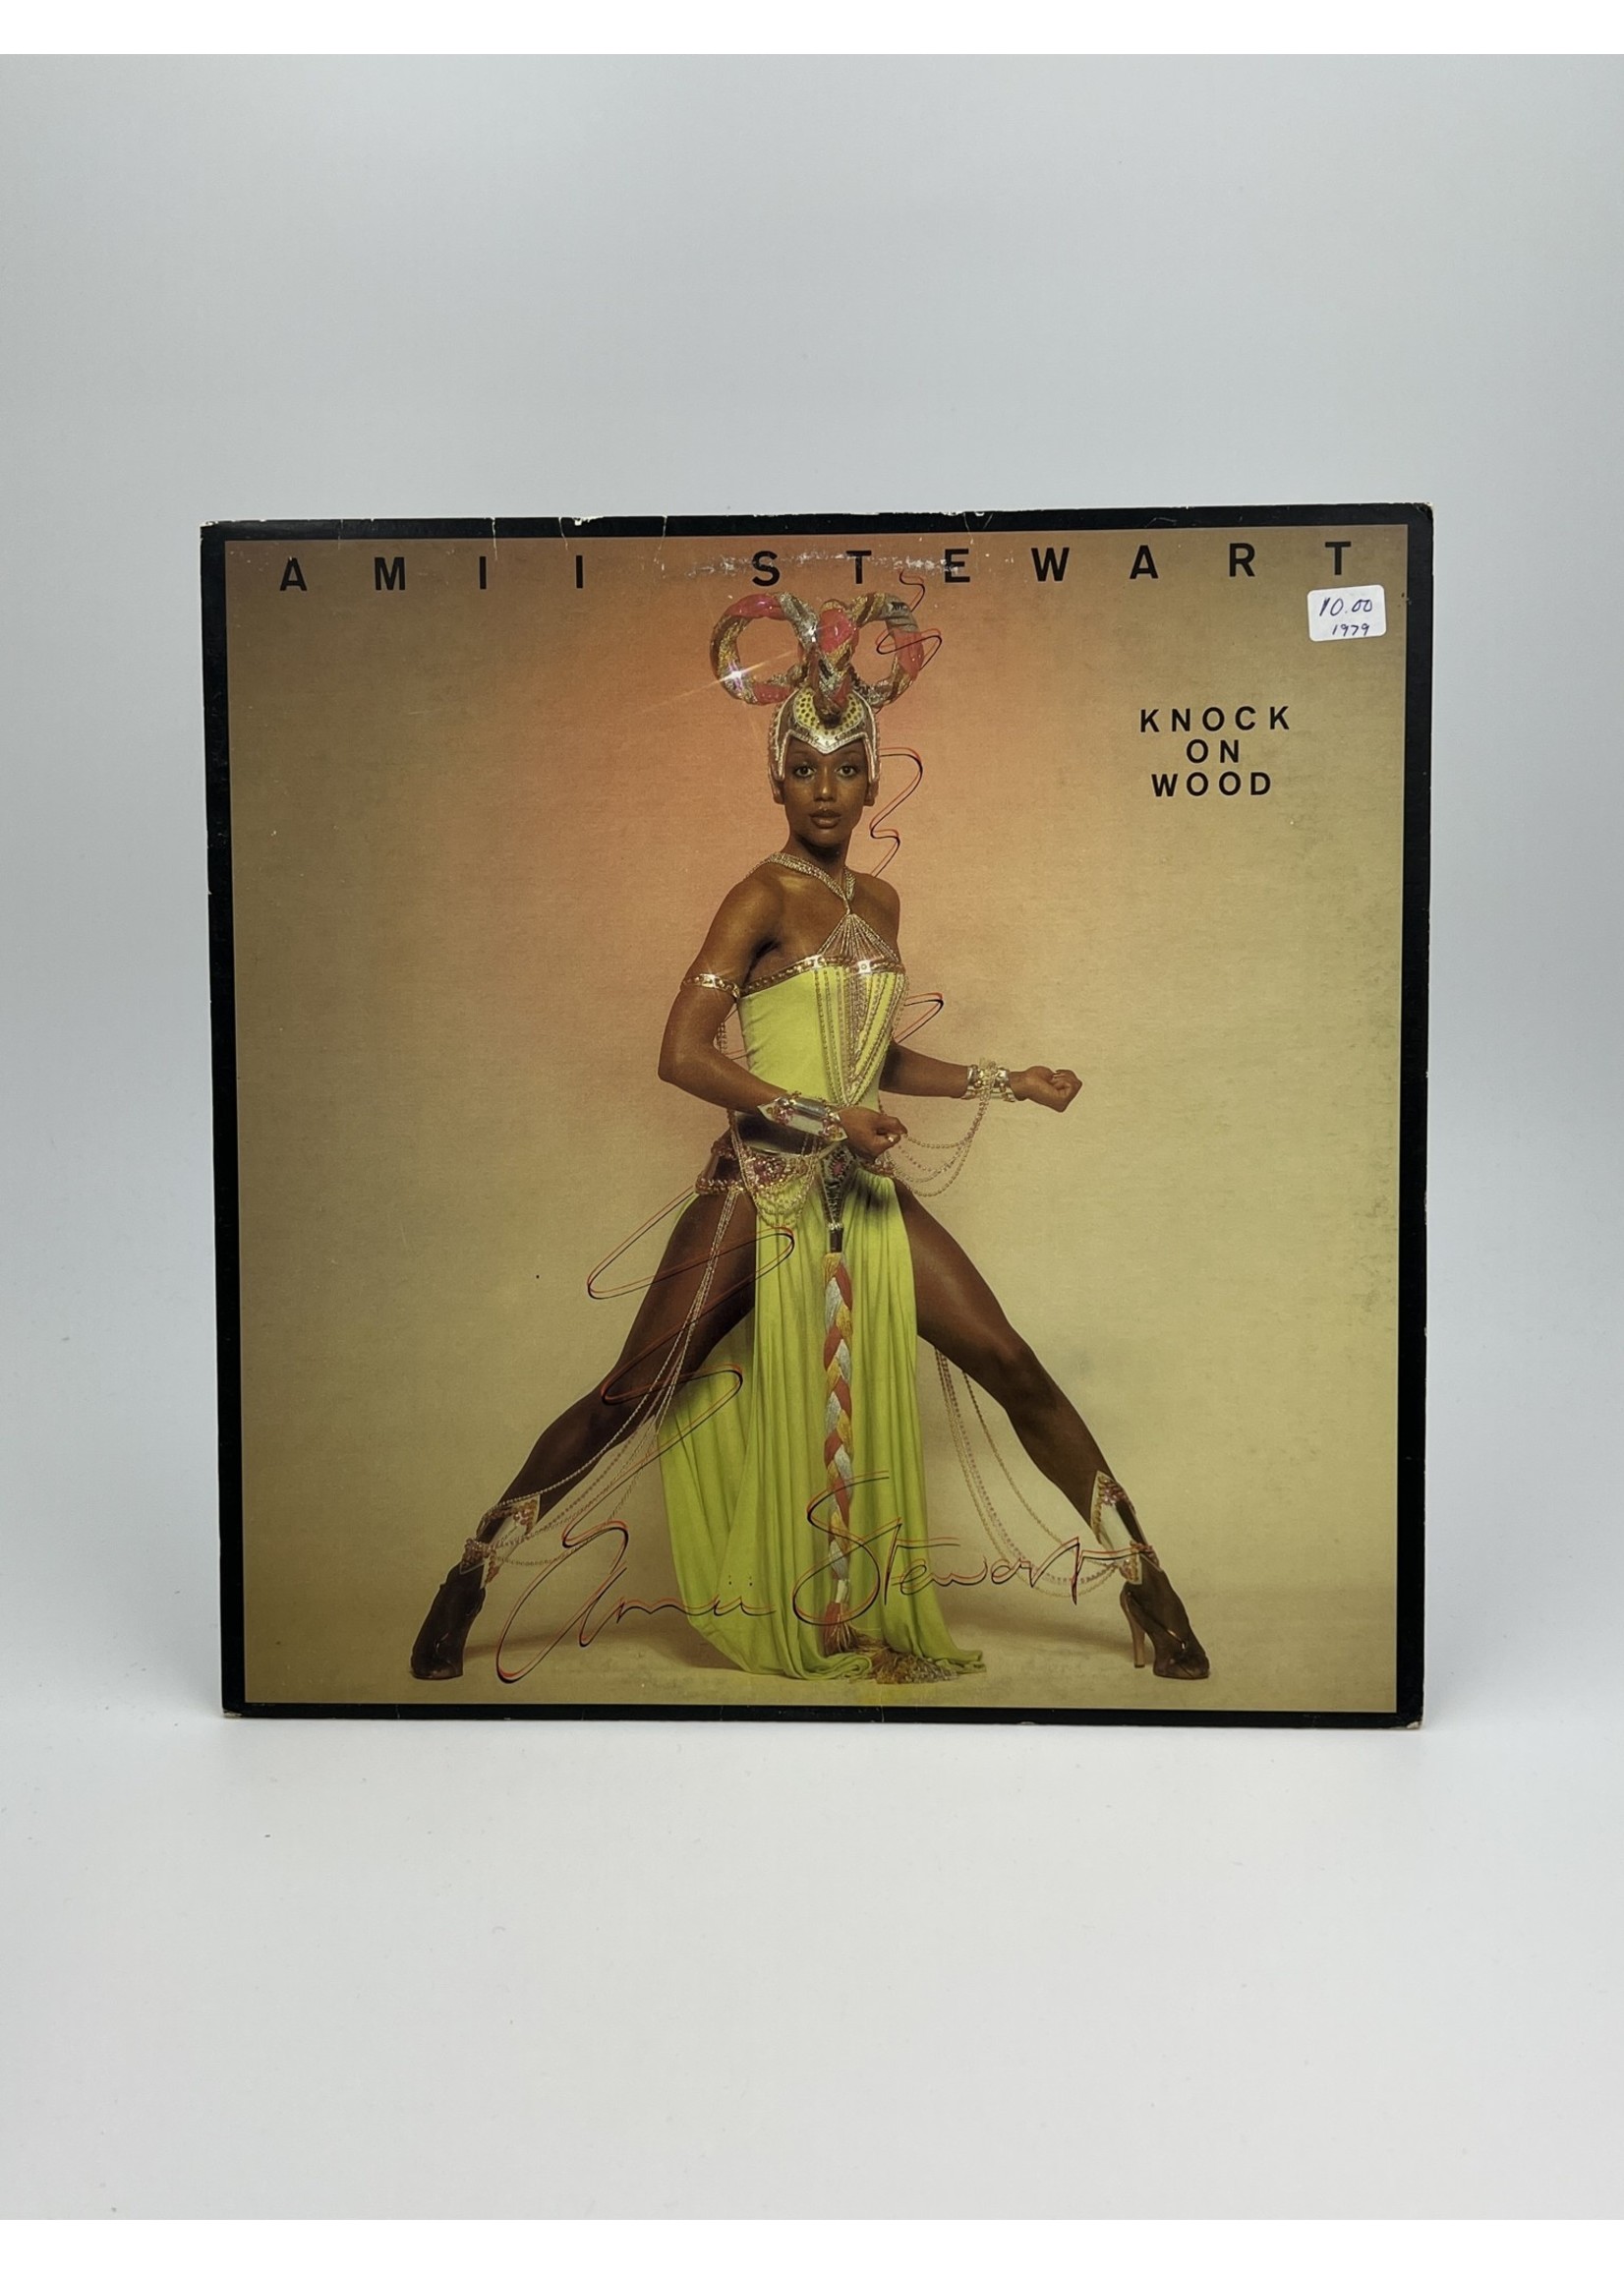 LP Amii Stewart Knock On Wood LP Record